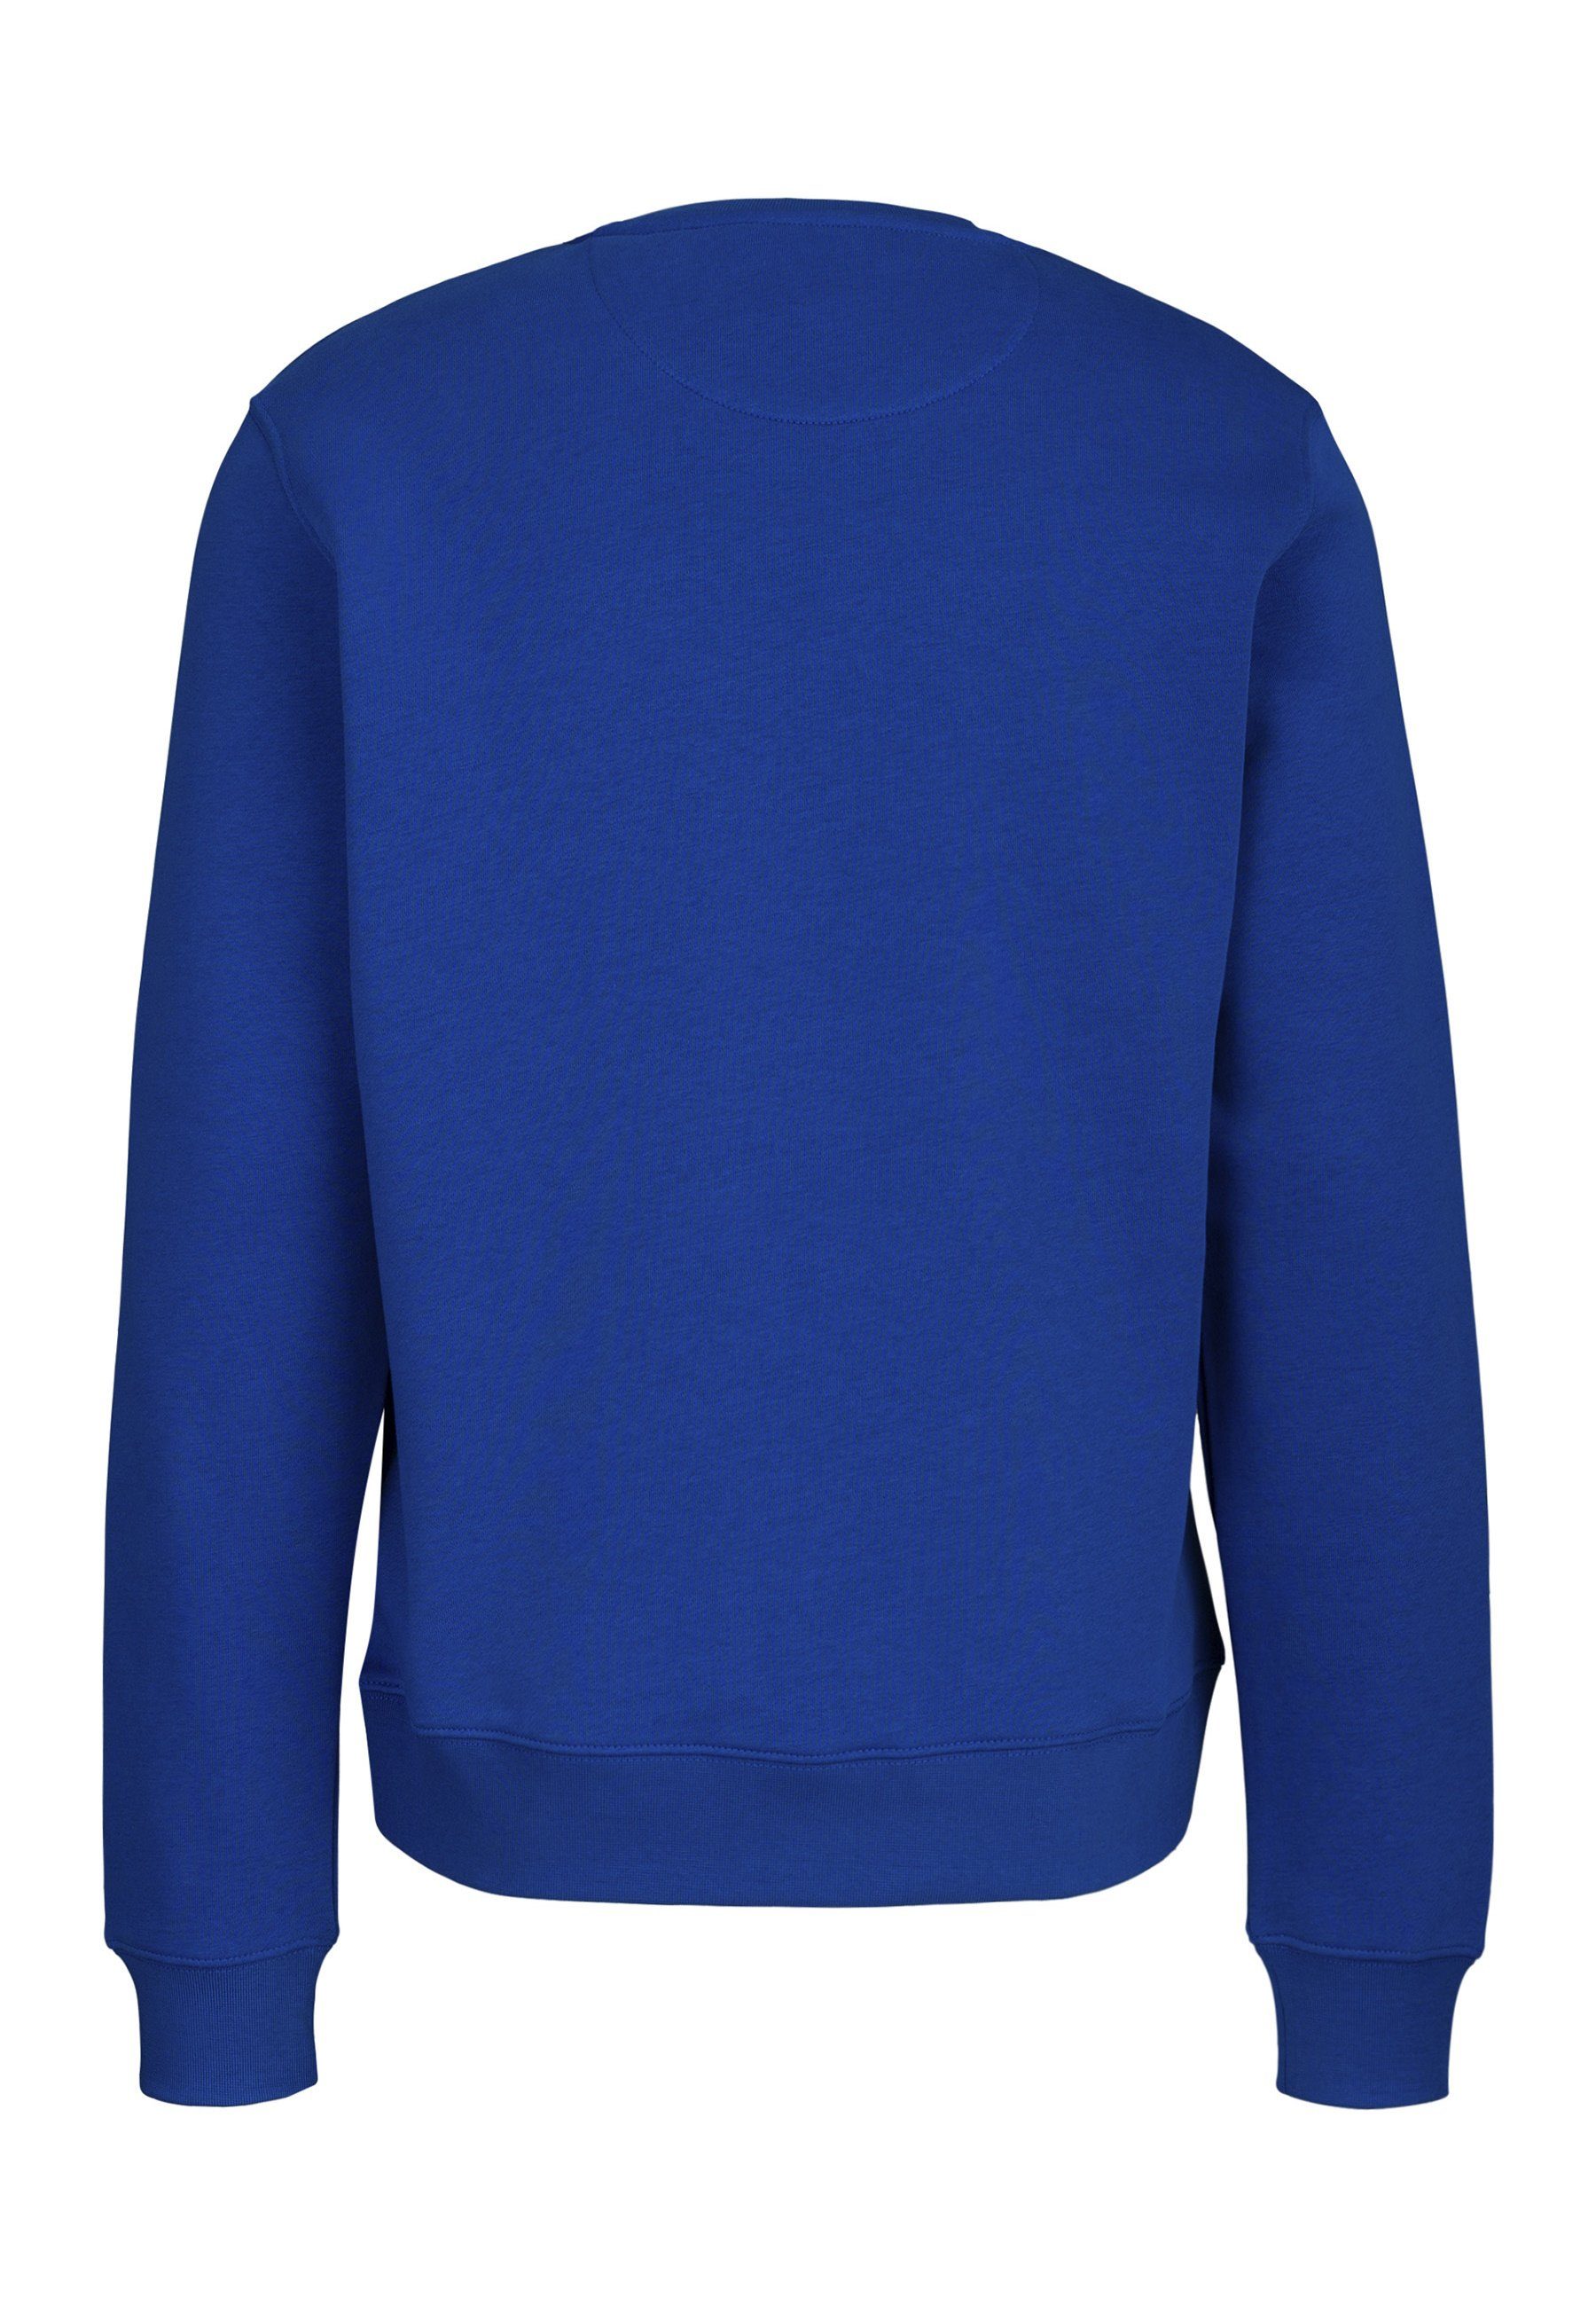 Sweatshirt Pullover Versace Sweatshirt by BILLY 19V69 Italia